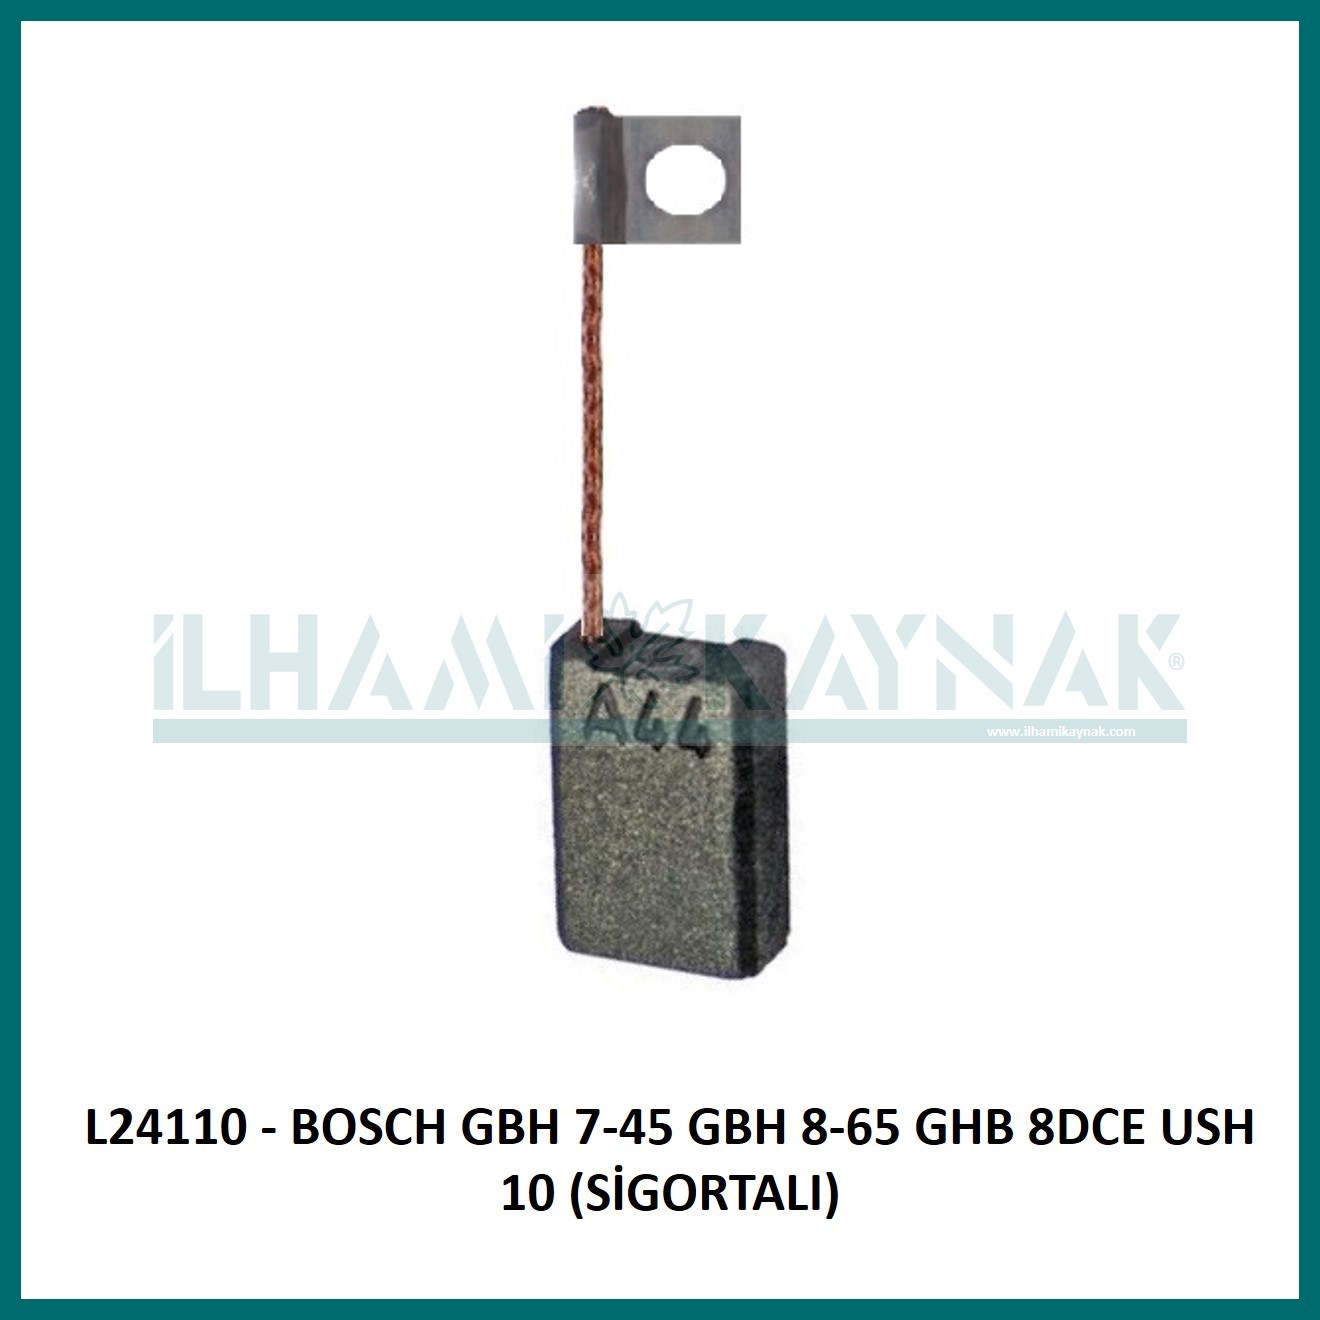 L24110 - BOSCH GBH 7-45 GBH 8-65 GHB 8DCE USH 10 (SİGORTALI) - 6.3*12.3*18 mm - 100 Adet